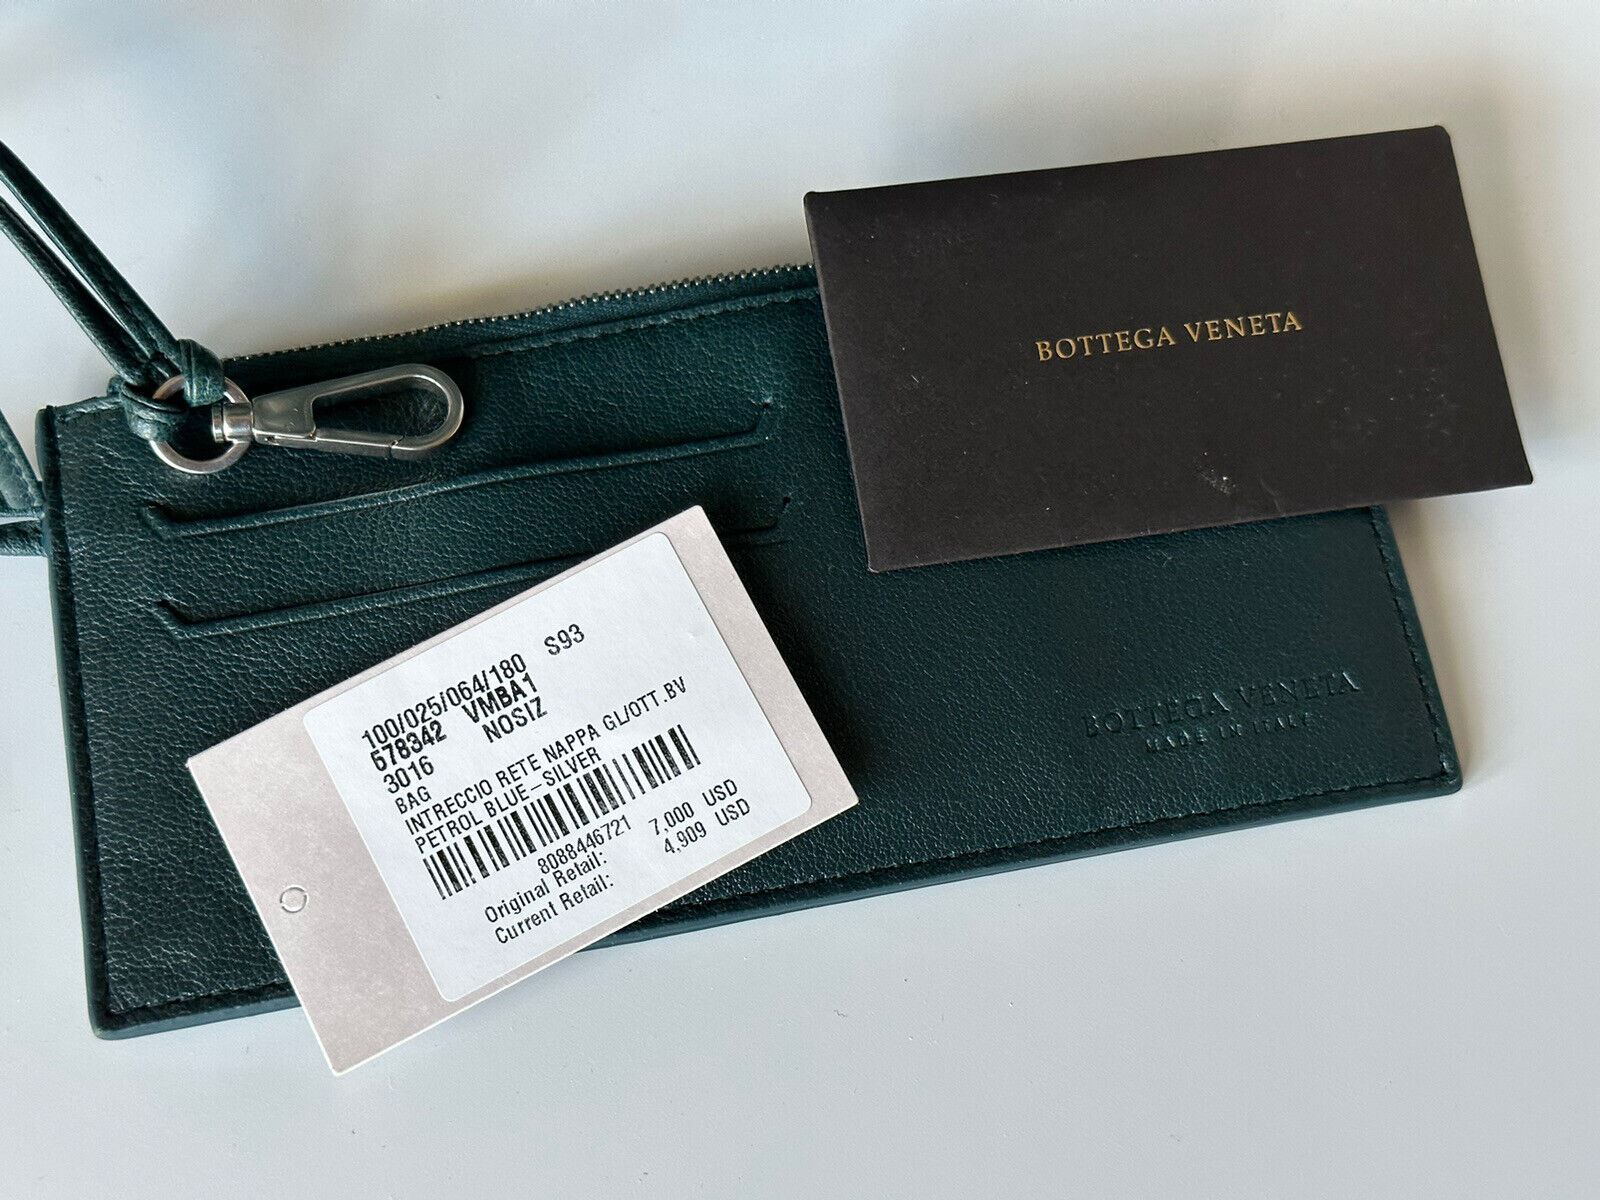 Neu mit Etikett: 7.000 $ Bottega Veneta Mittelgroße Korbtasche aus Leder in Intreccio Rete 578342